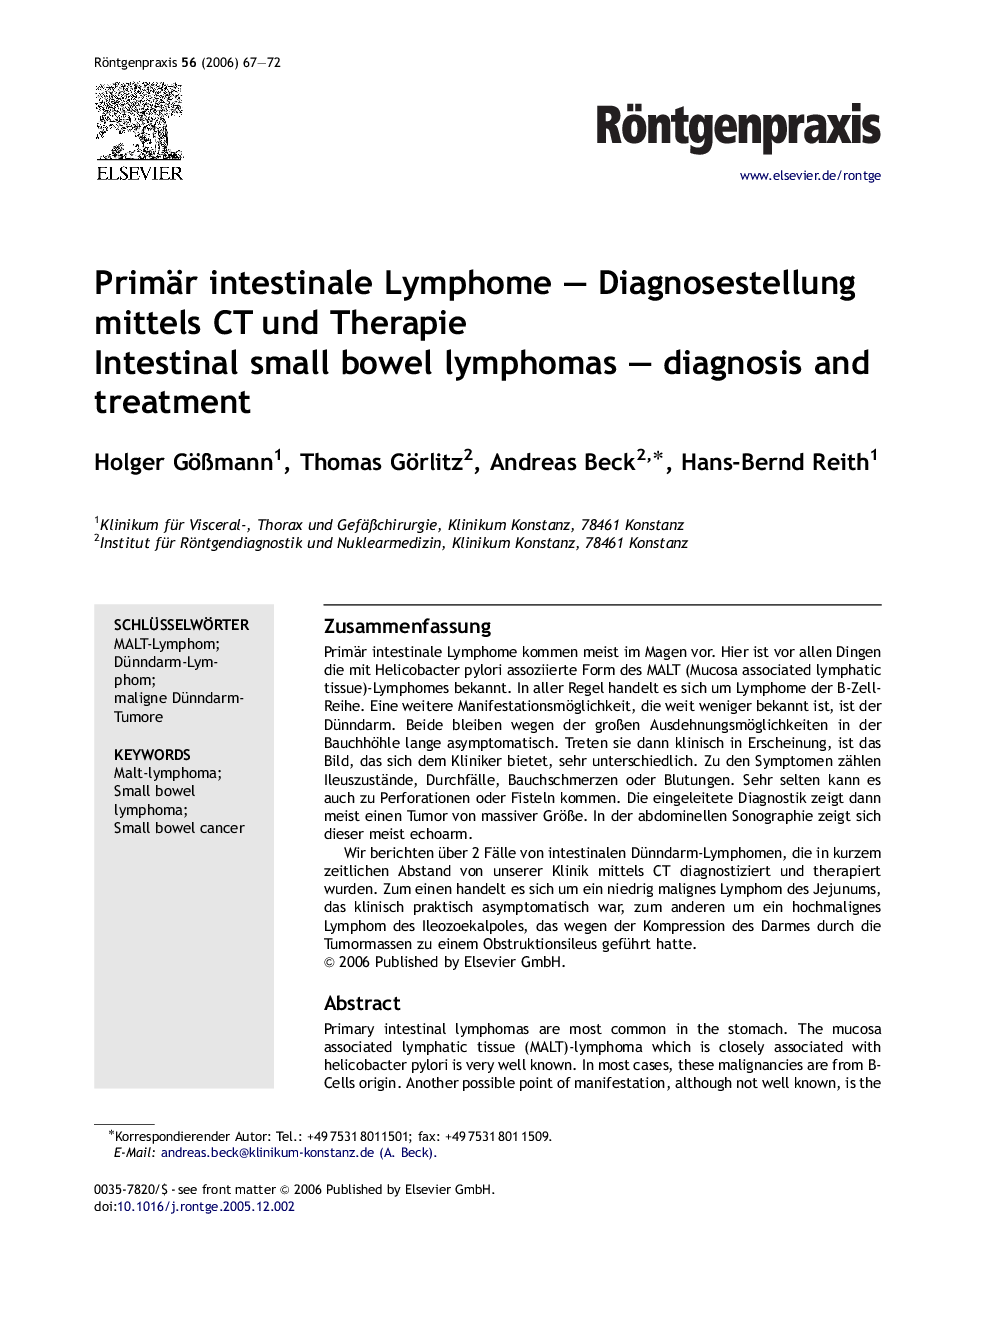 Primär intestinale Lymphome — Diagnosestellung mittels CT und Therapie